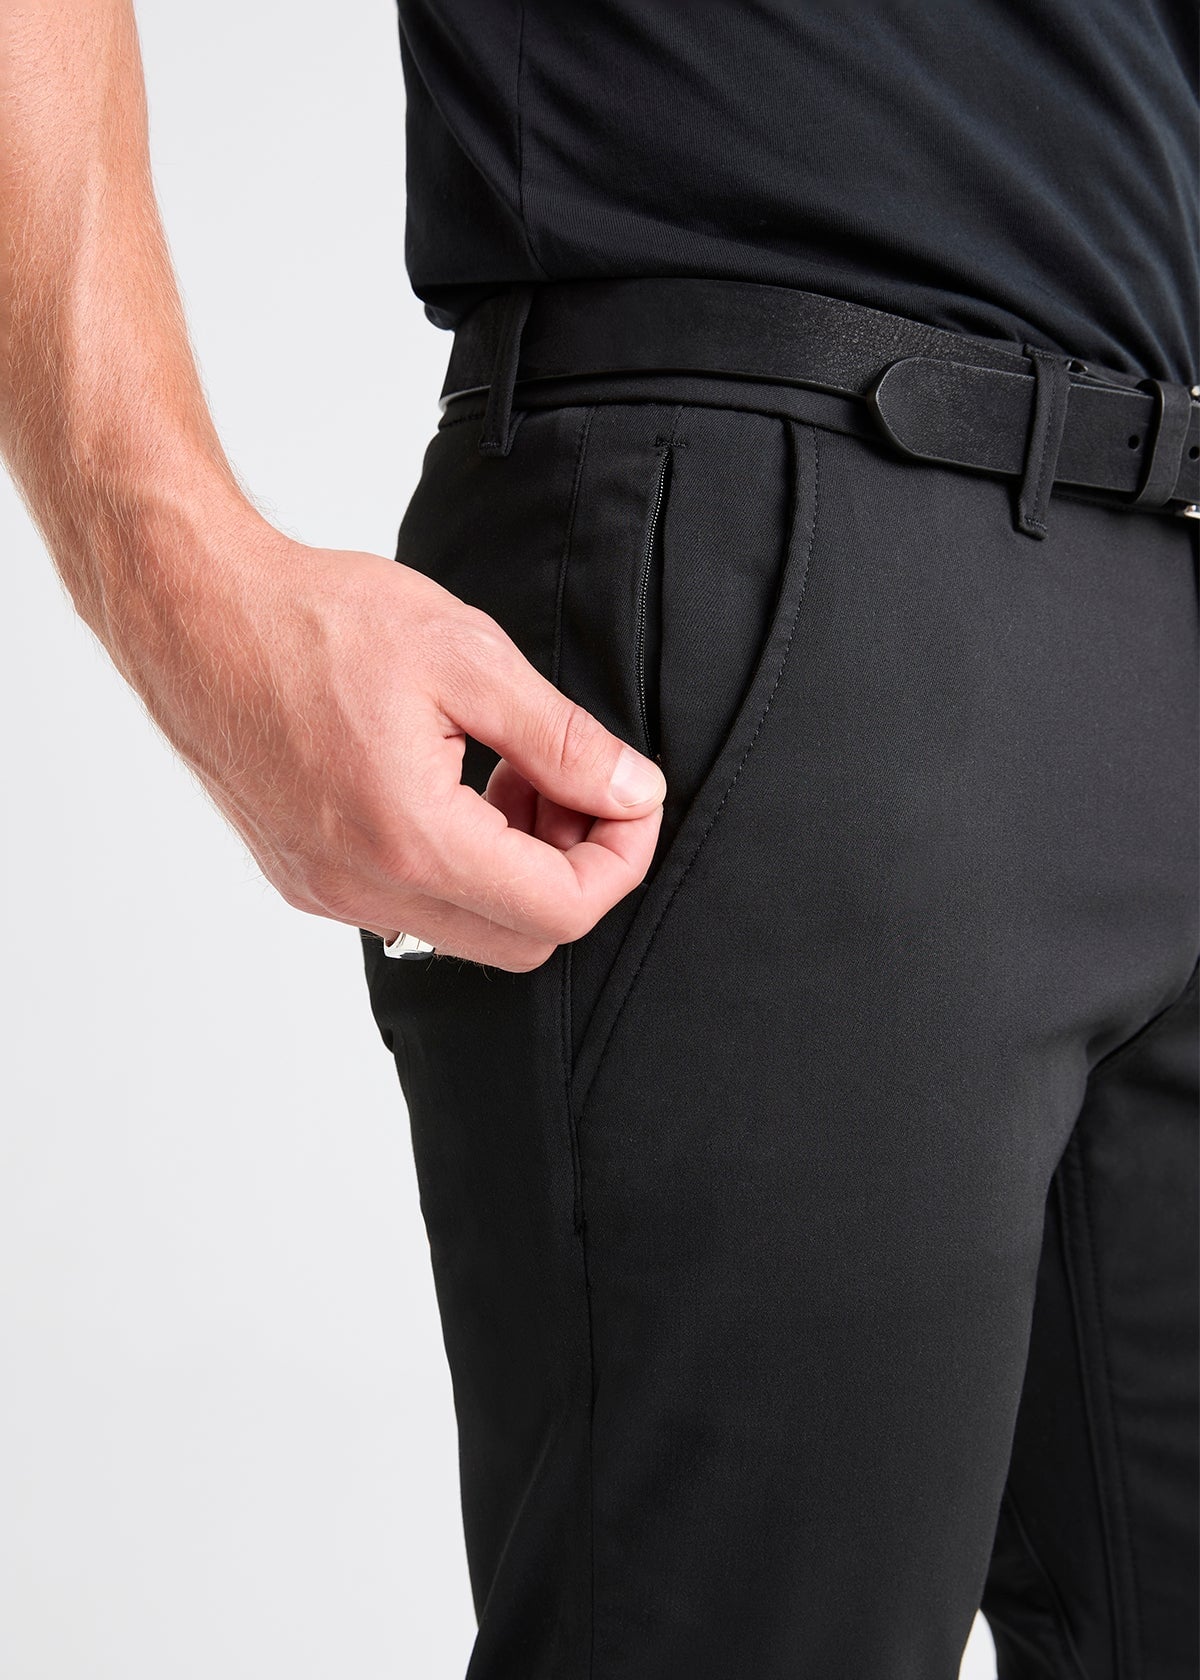 SIAL - Black Men's Casual Pant Smart Dress Pant Size: 30/32/34/36